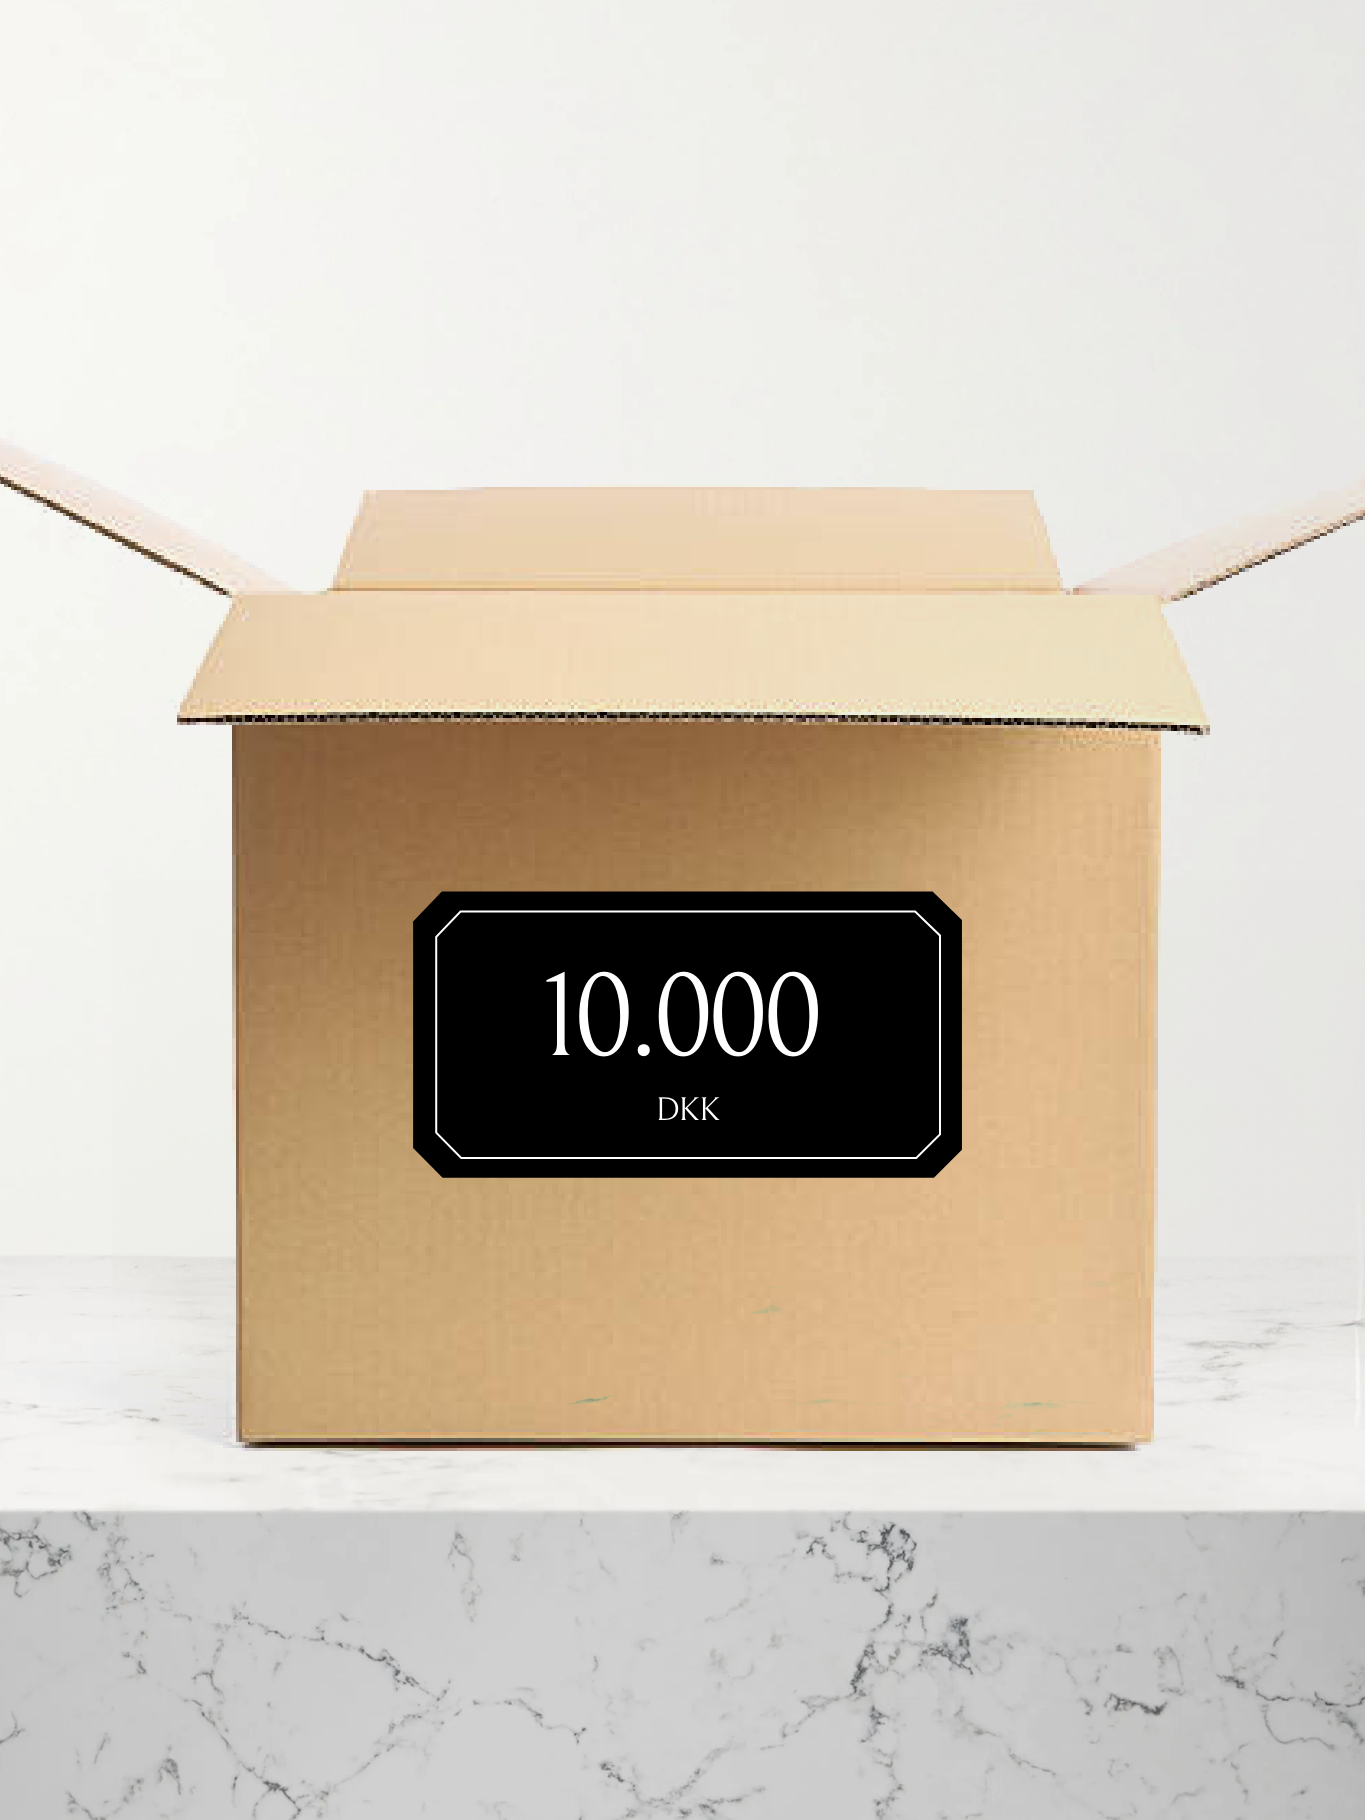 MYSTERY BOX FOR 10.000 DKK